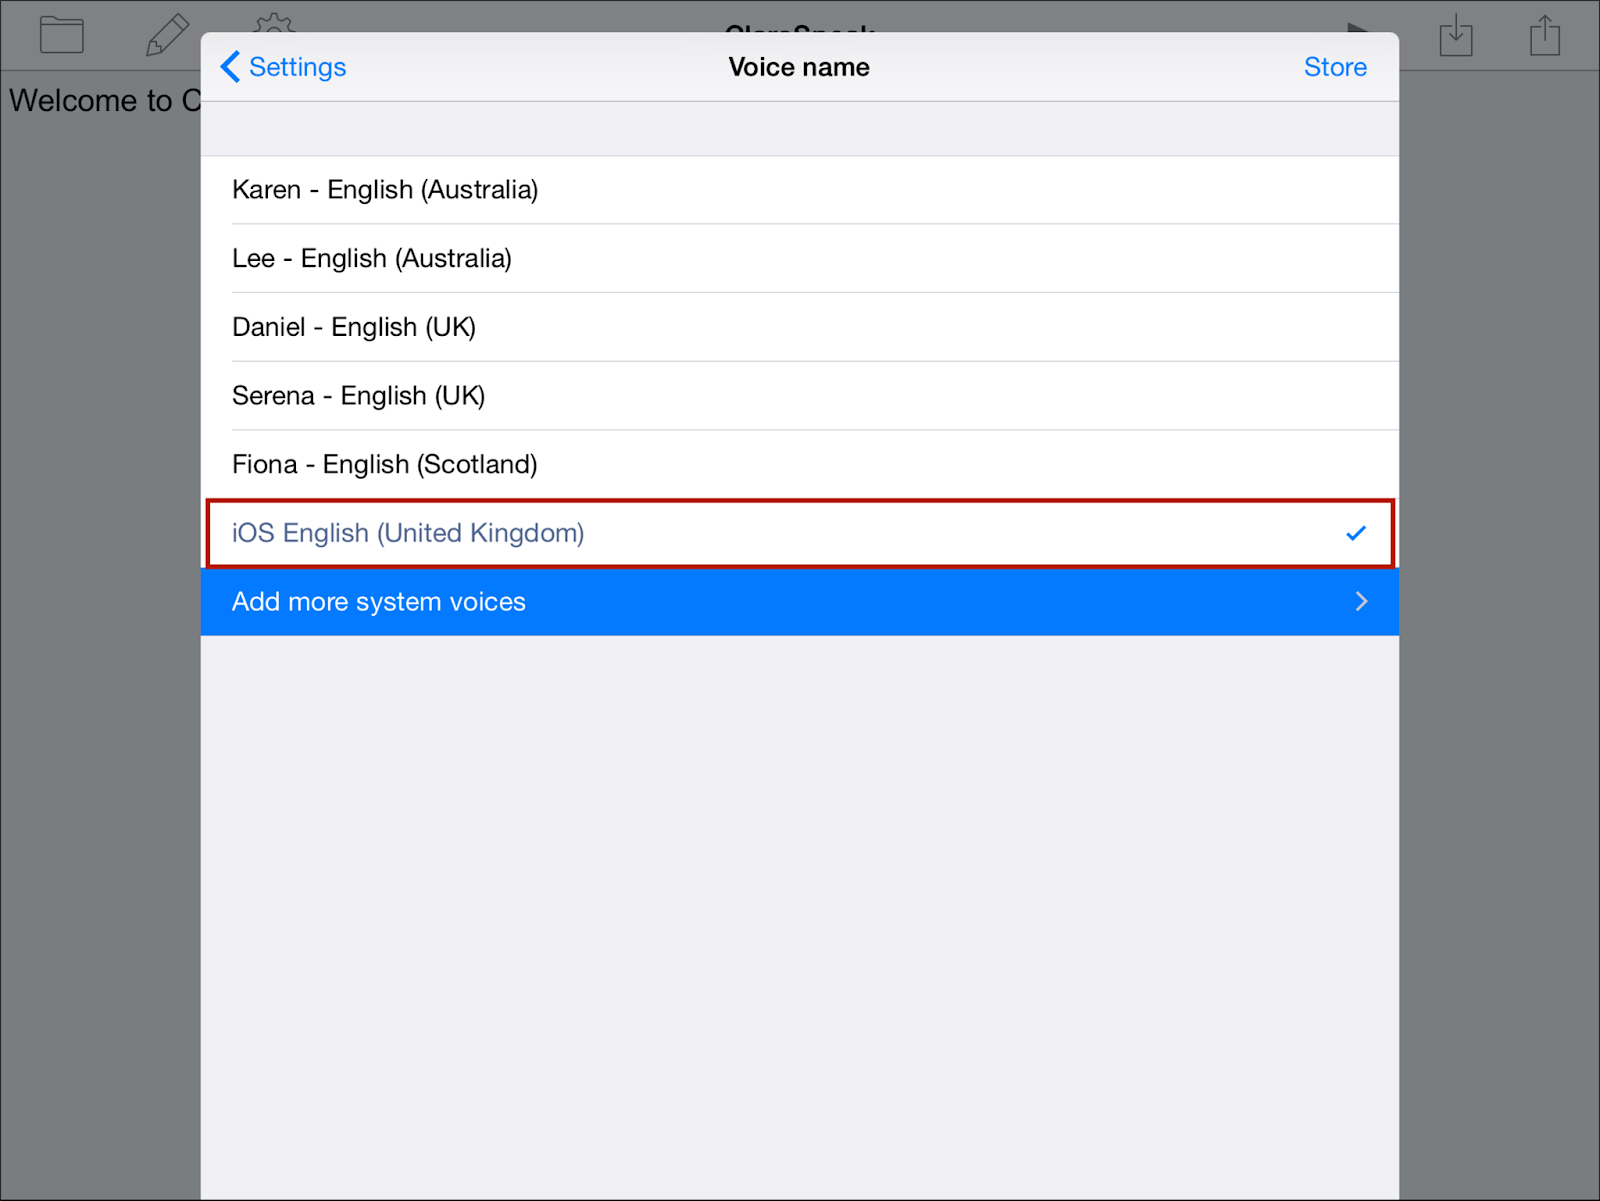 iOS voice name menu with iOS English highlighted